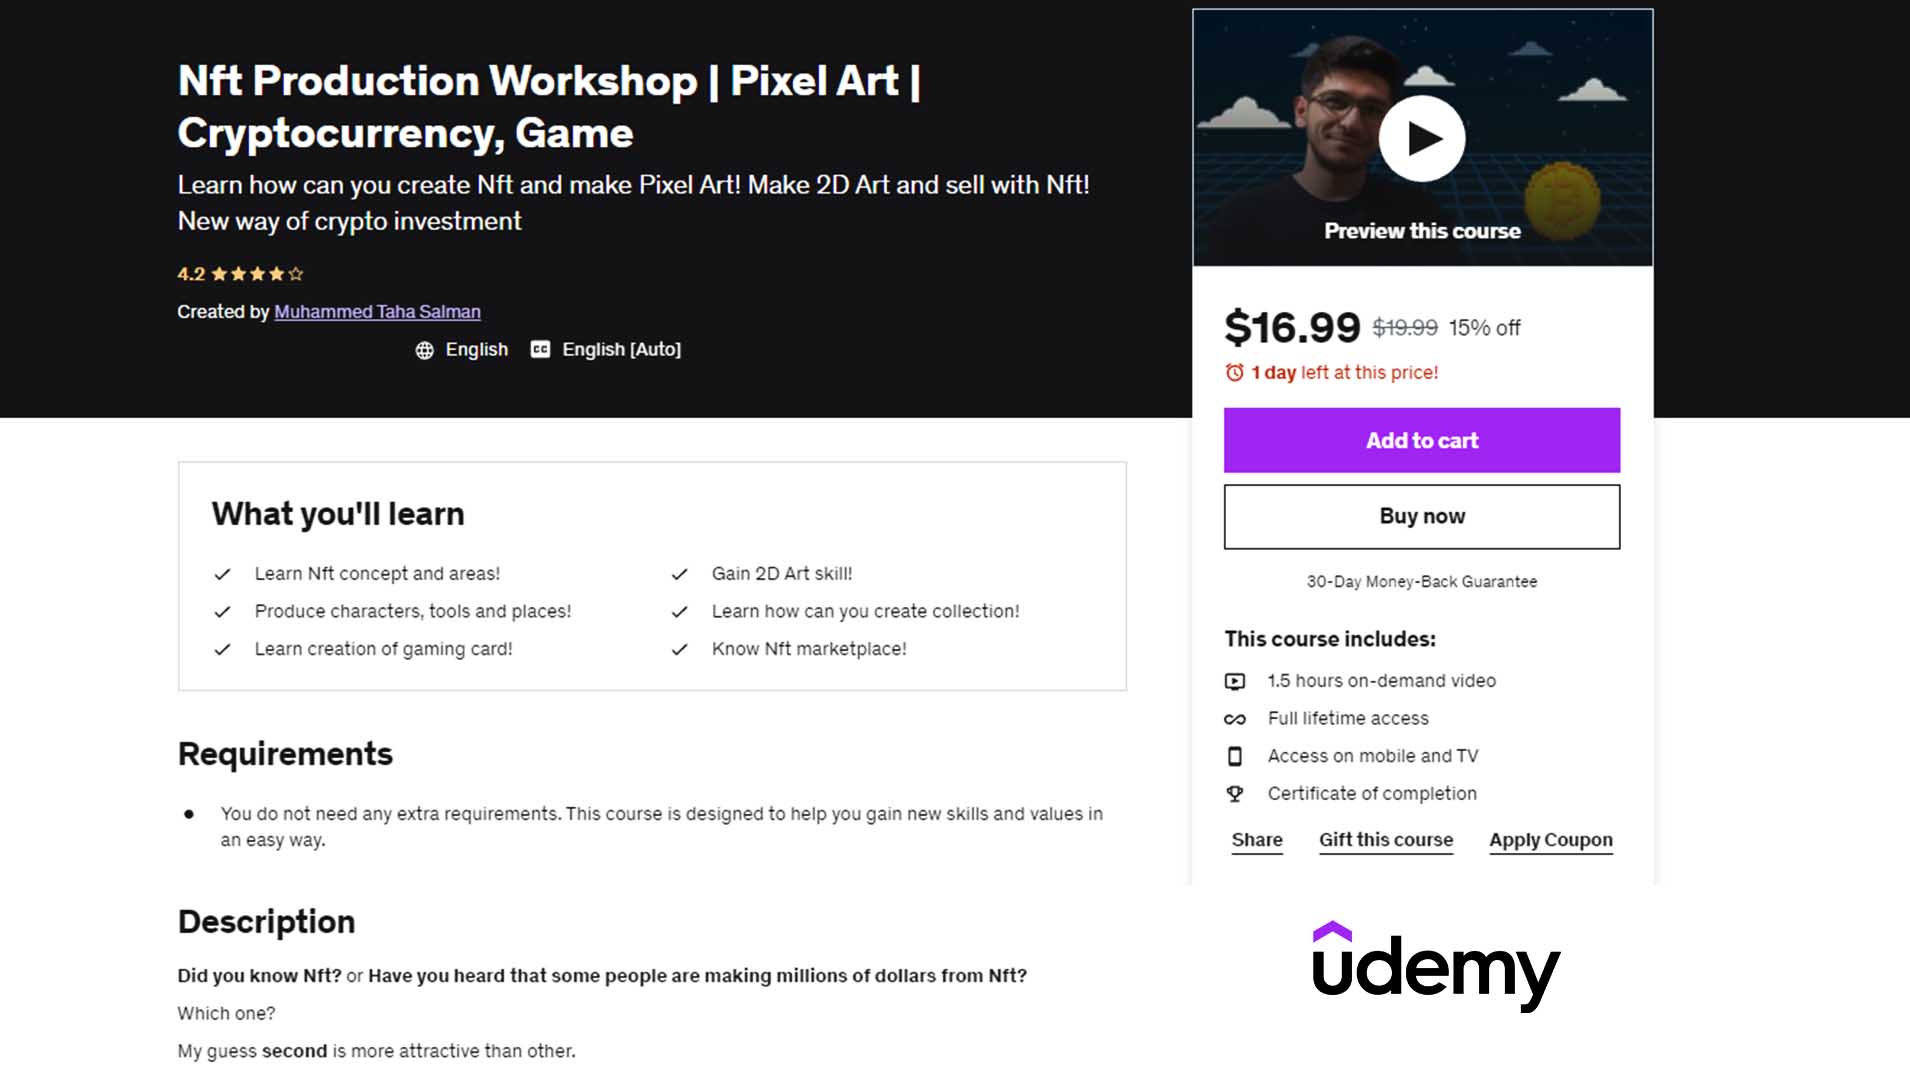 NFT Production Workshop | Pixel Art | Cryptocurrency, Game